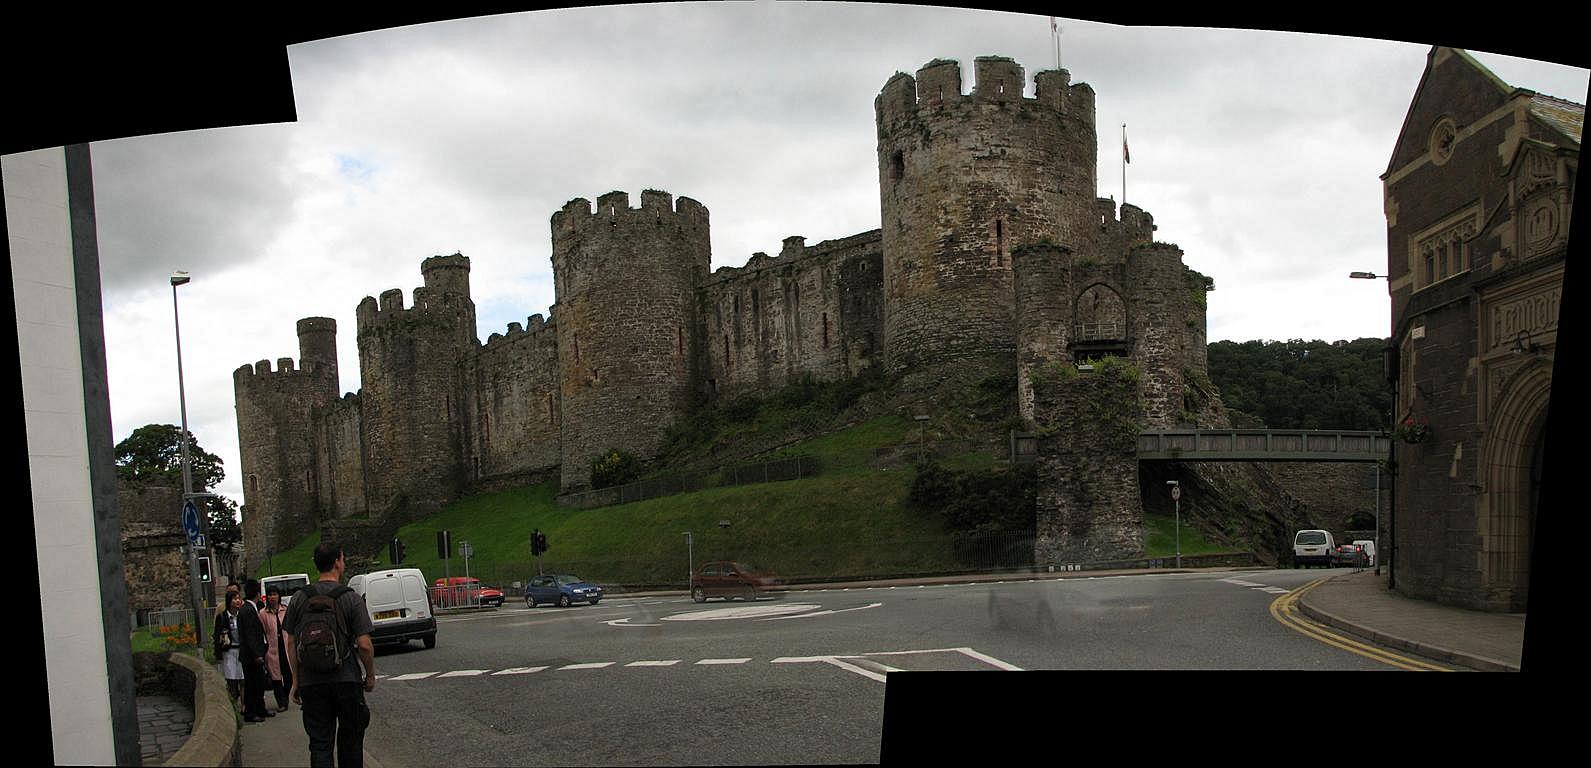 Conwy castle